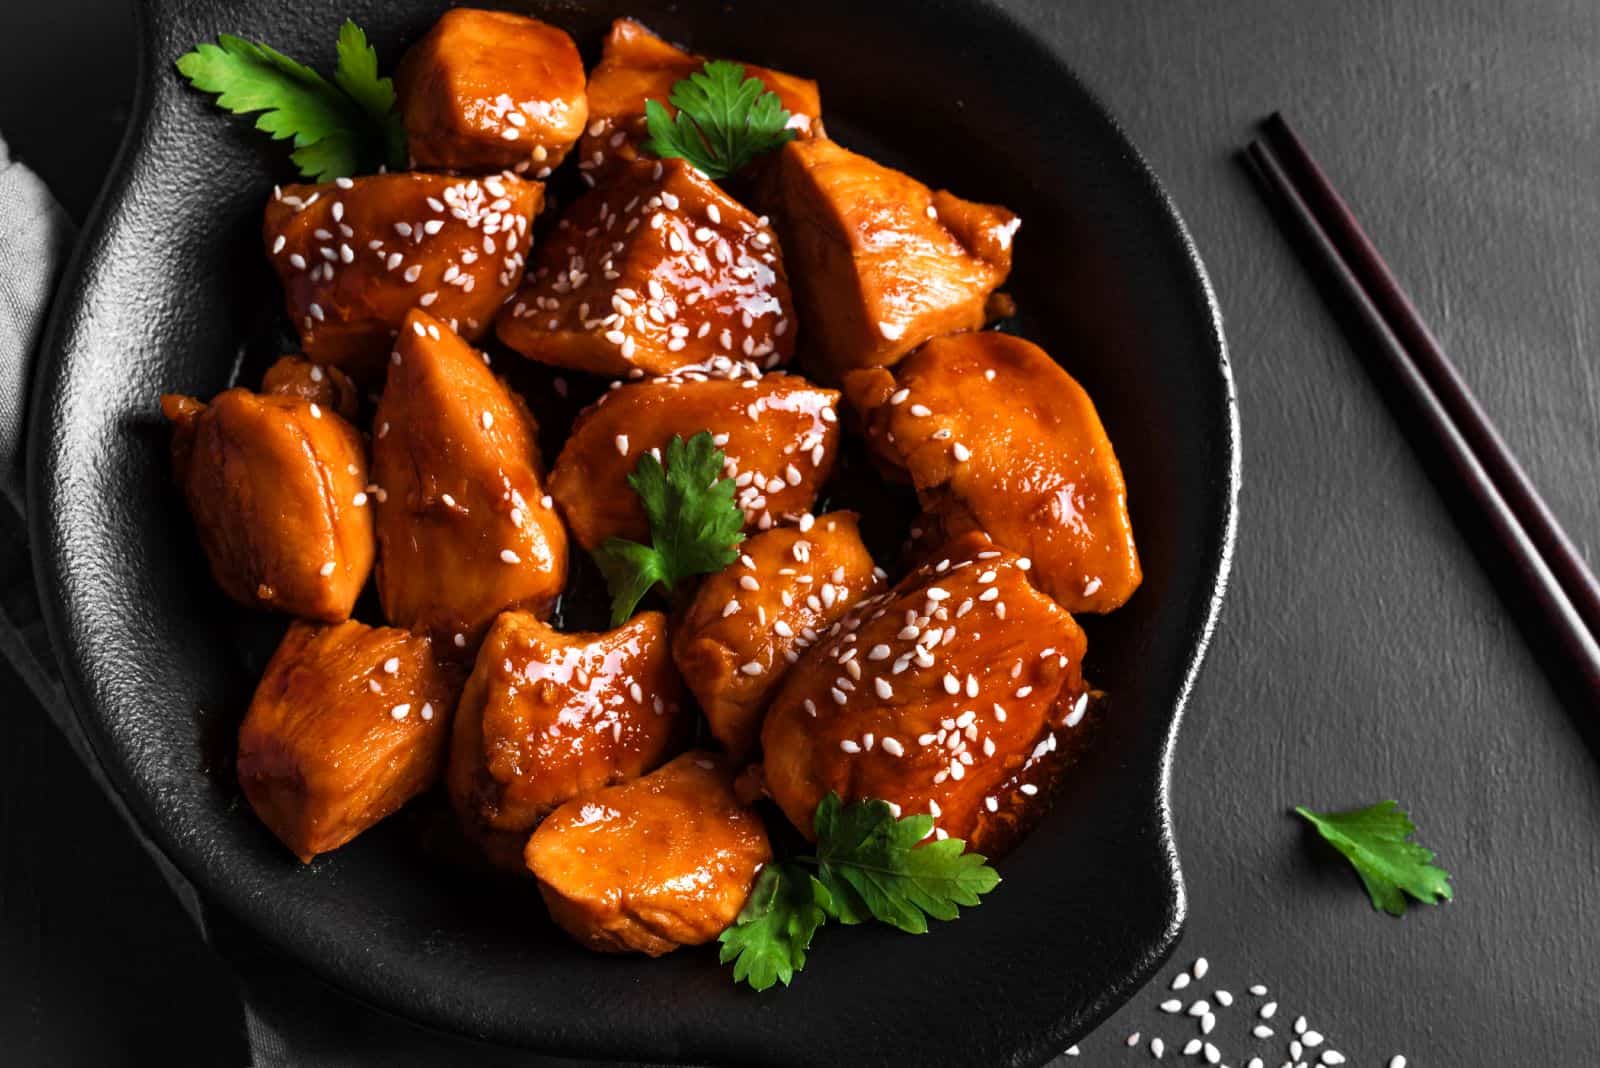 sesame chicken served in a black bowl with chopsticks